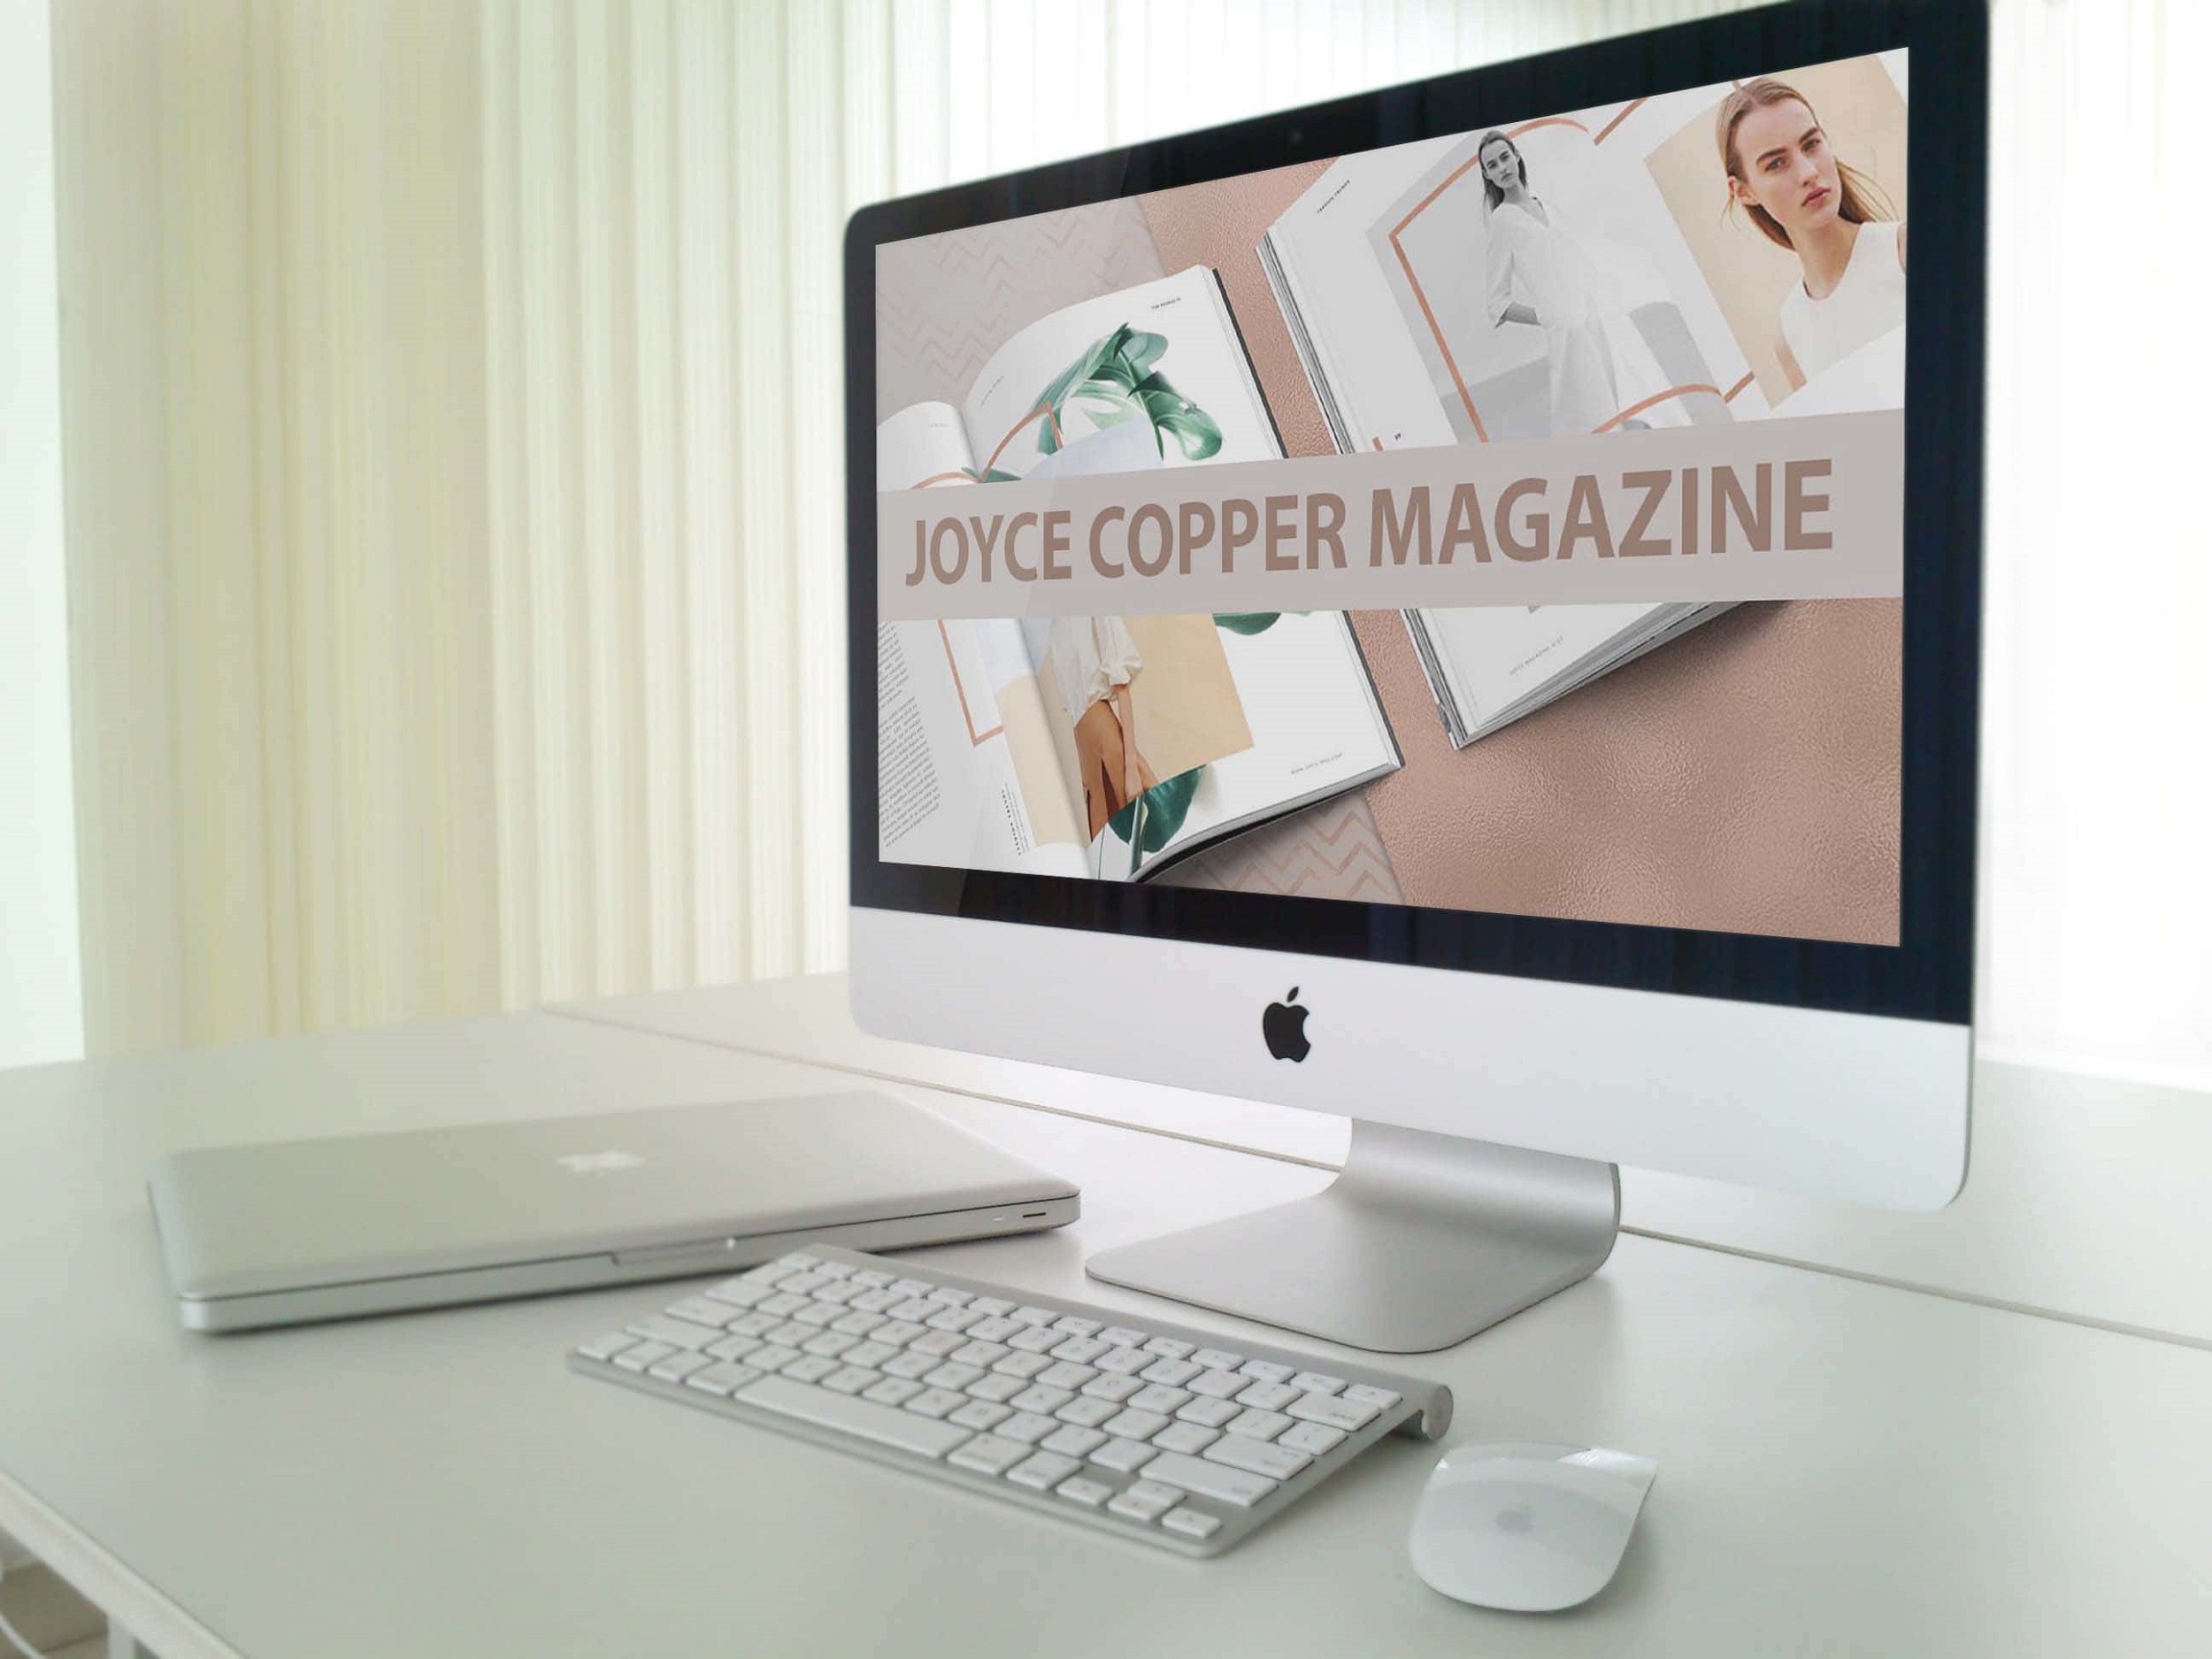 joyce copper magazine computer mockup.